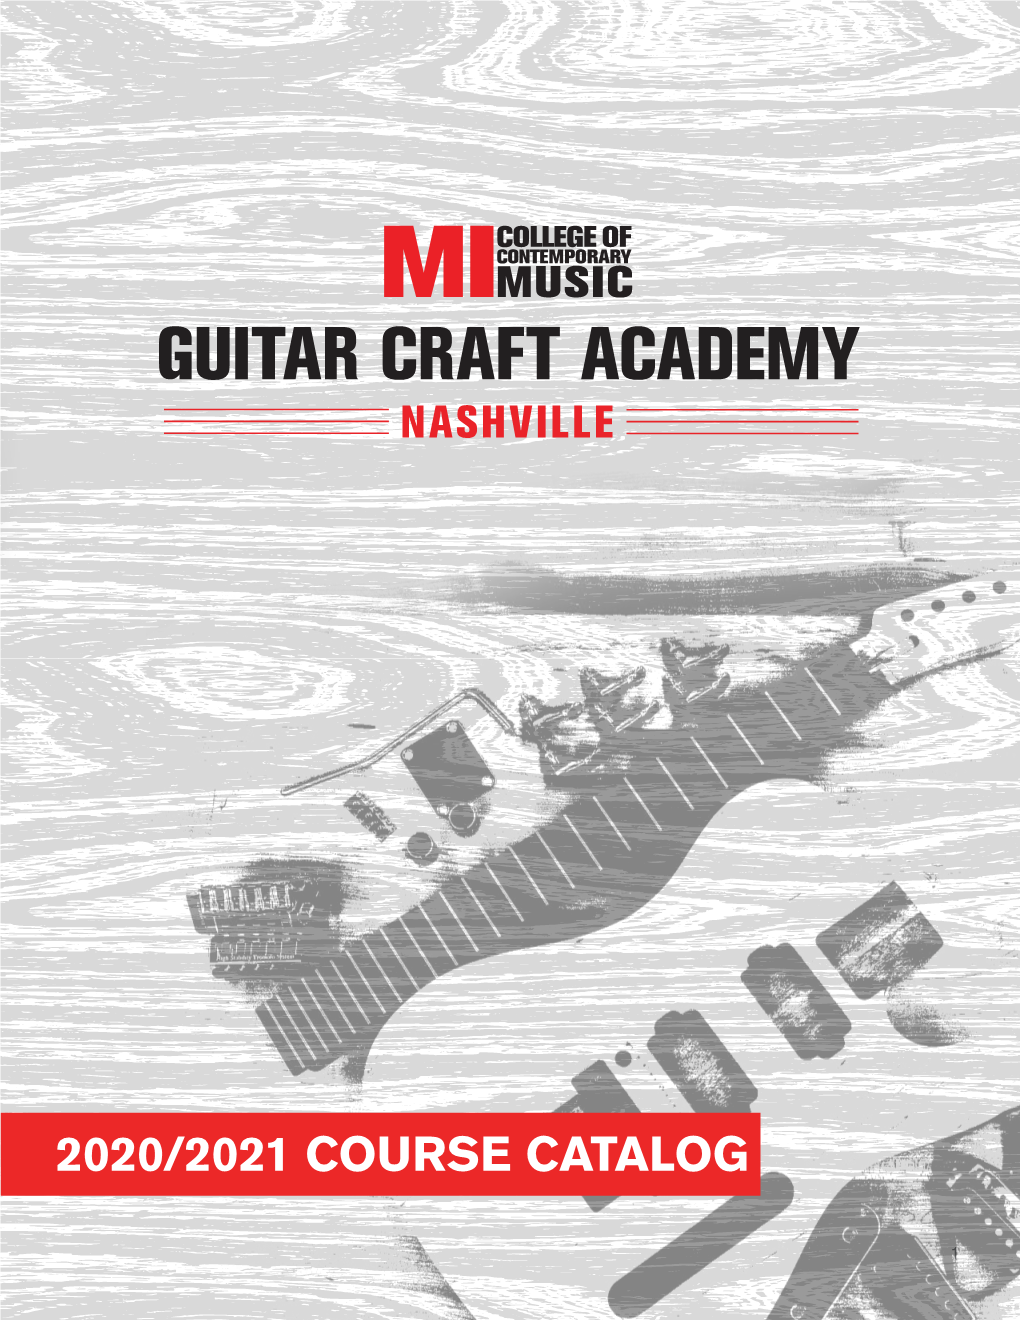 2020/2021 Course Catalog